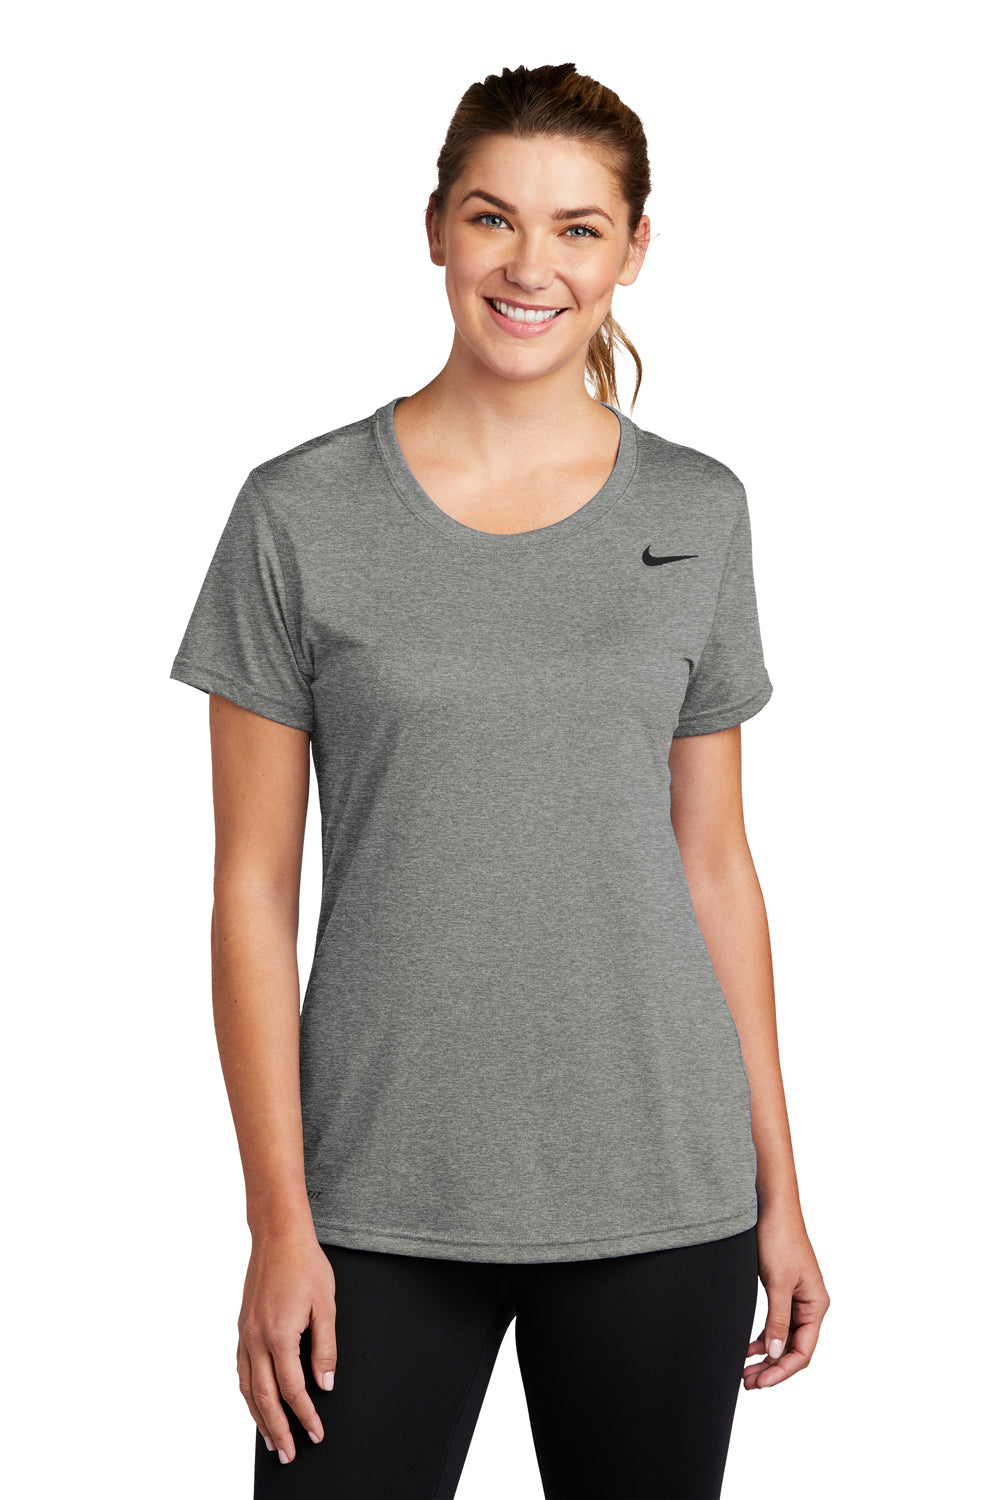 Nike Womens Legend Short Sleeve Crewneck T-Shirt Heather Carbon Grey Front